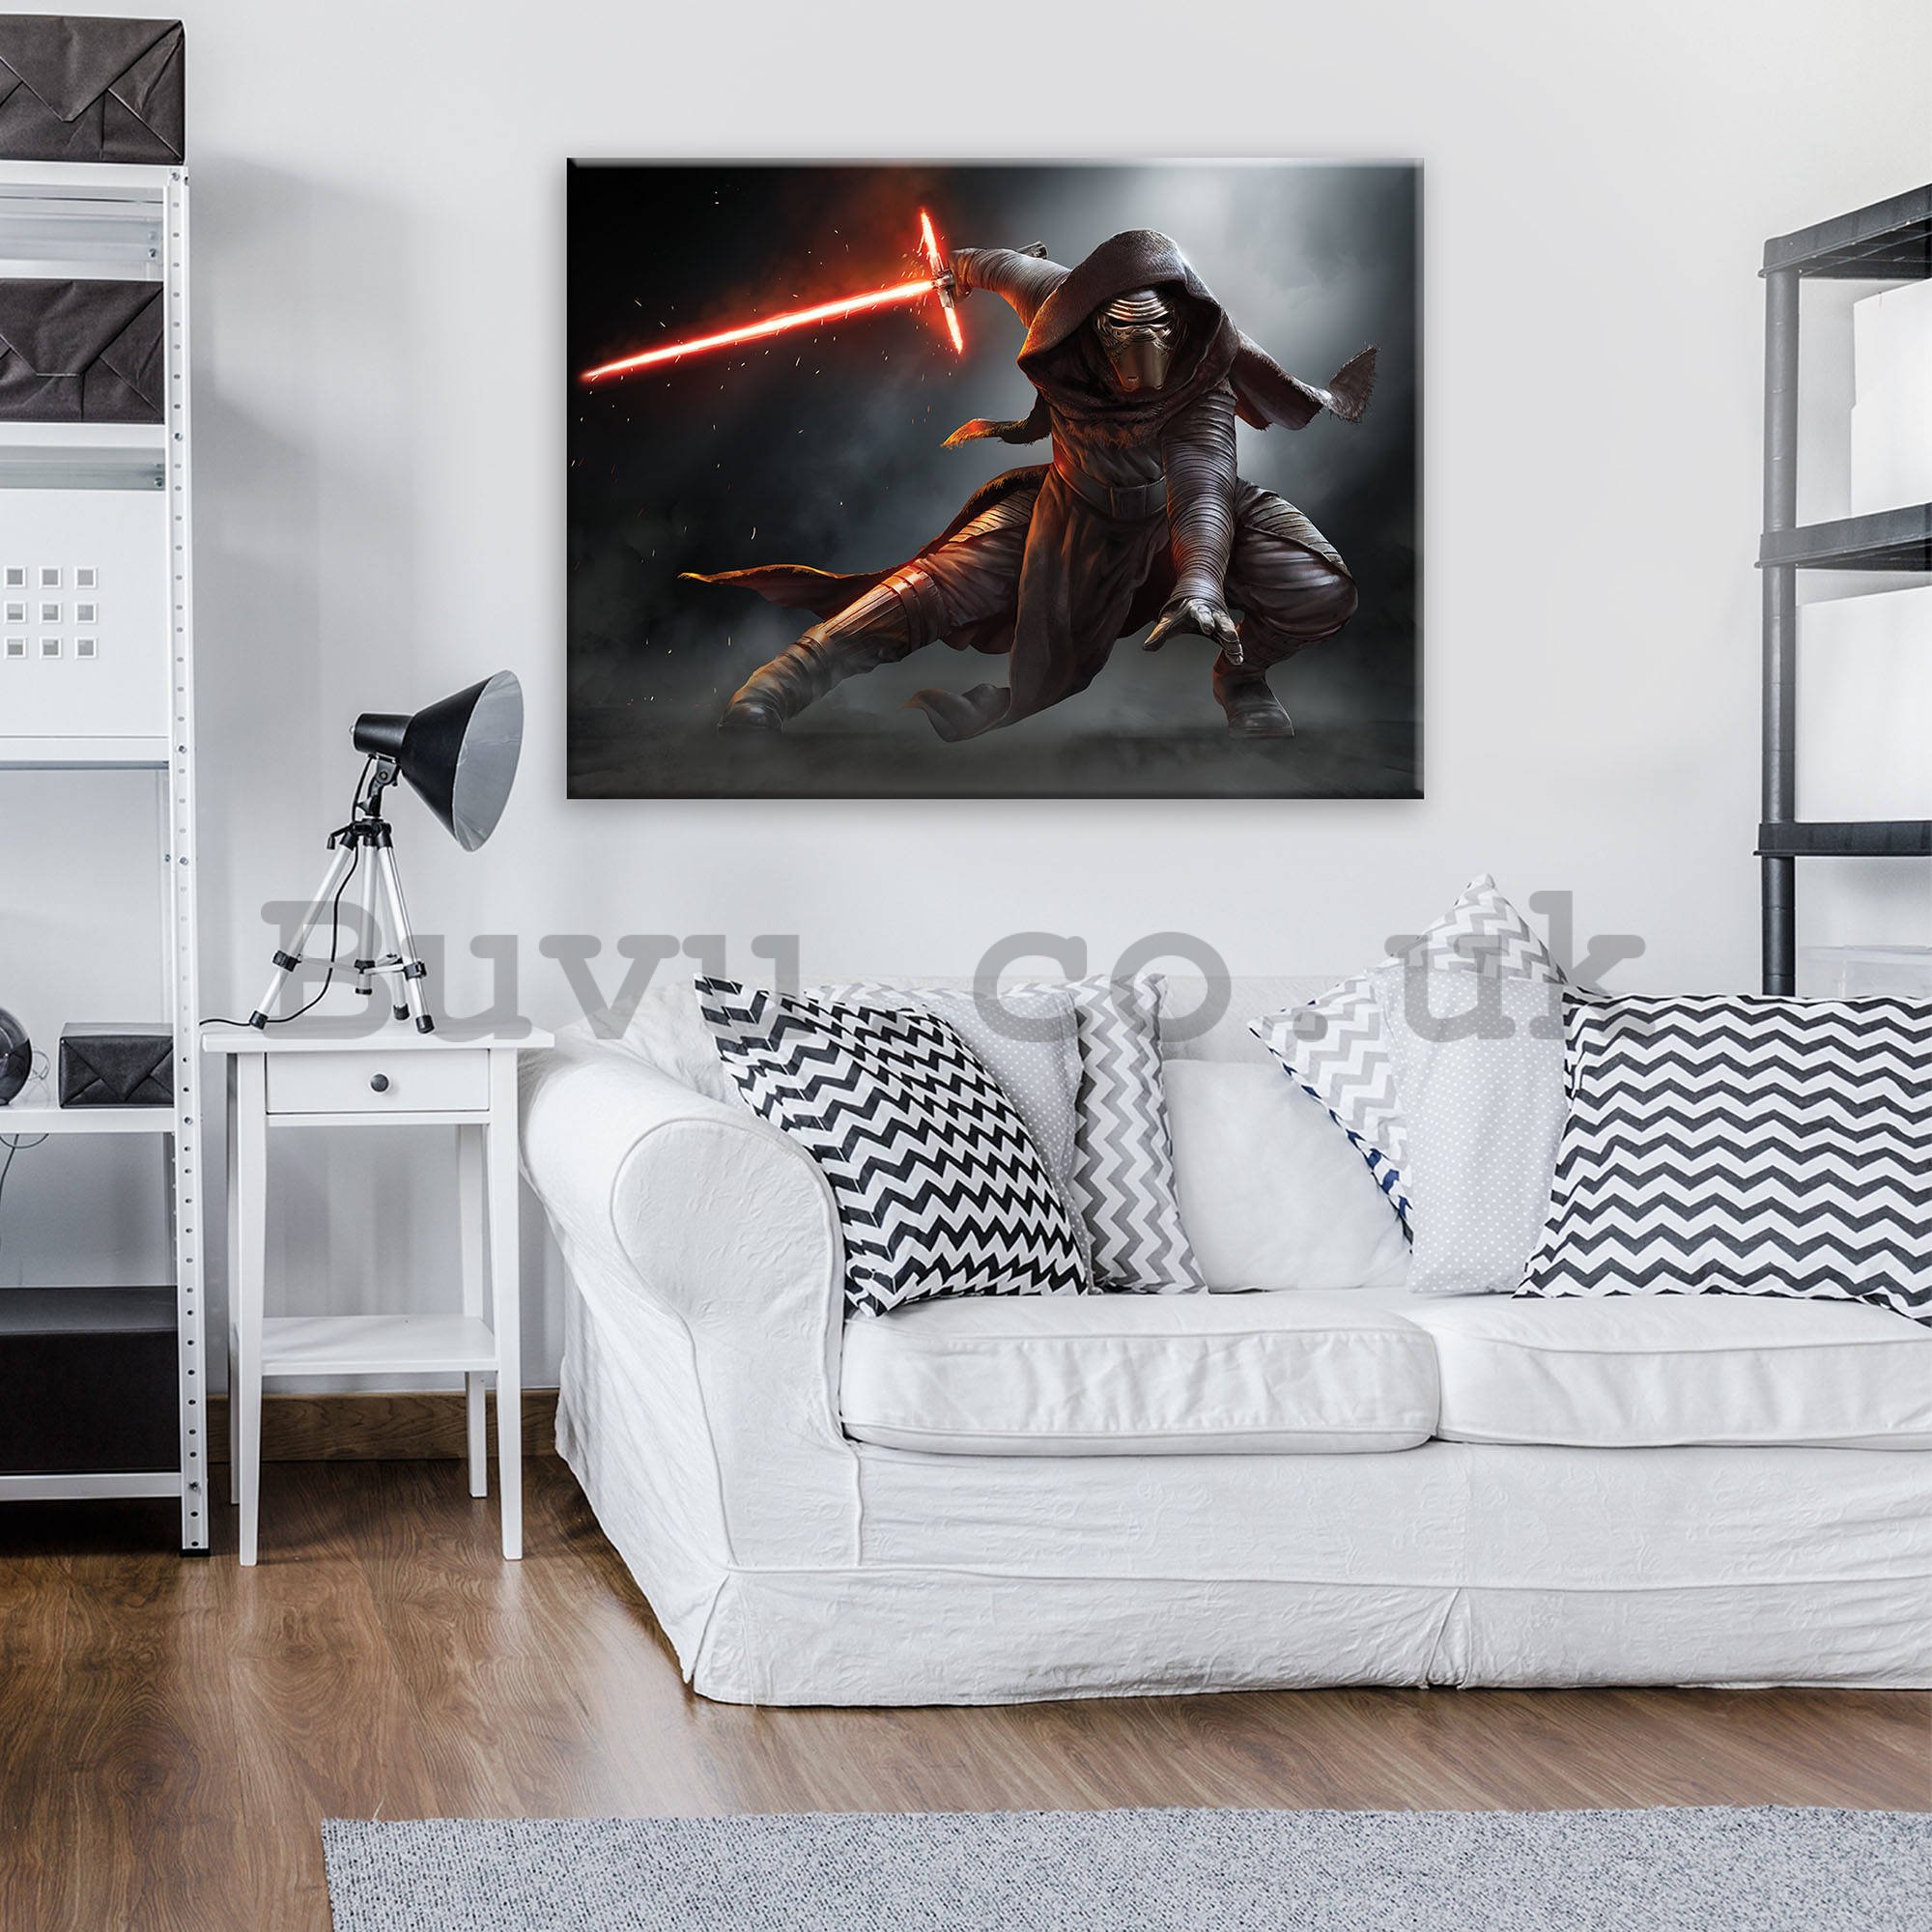 Painting on canvas: Star Wars, Kylo Ren - 100x75 cm